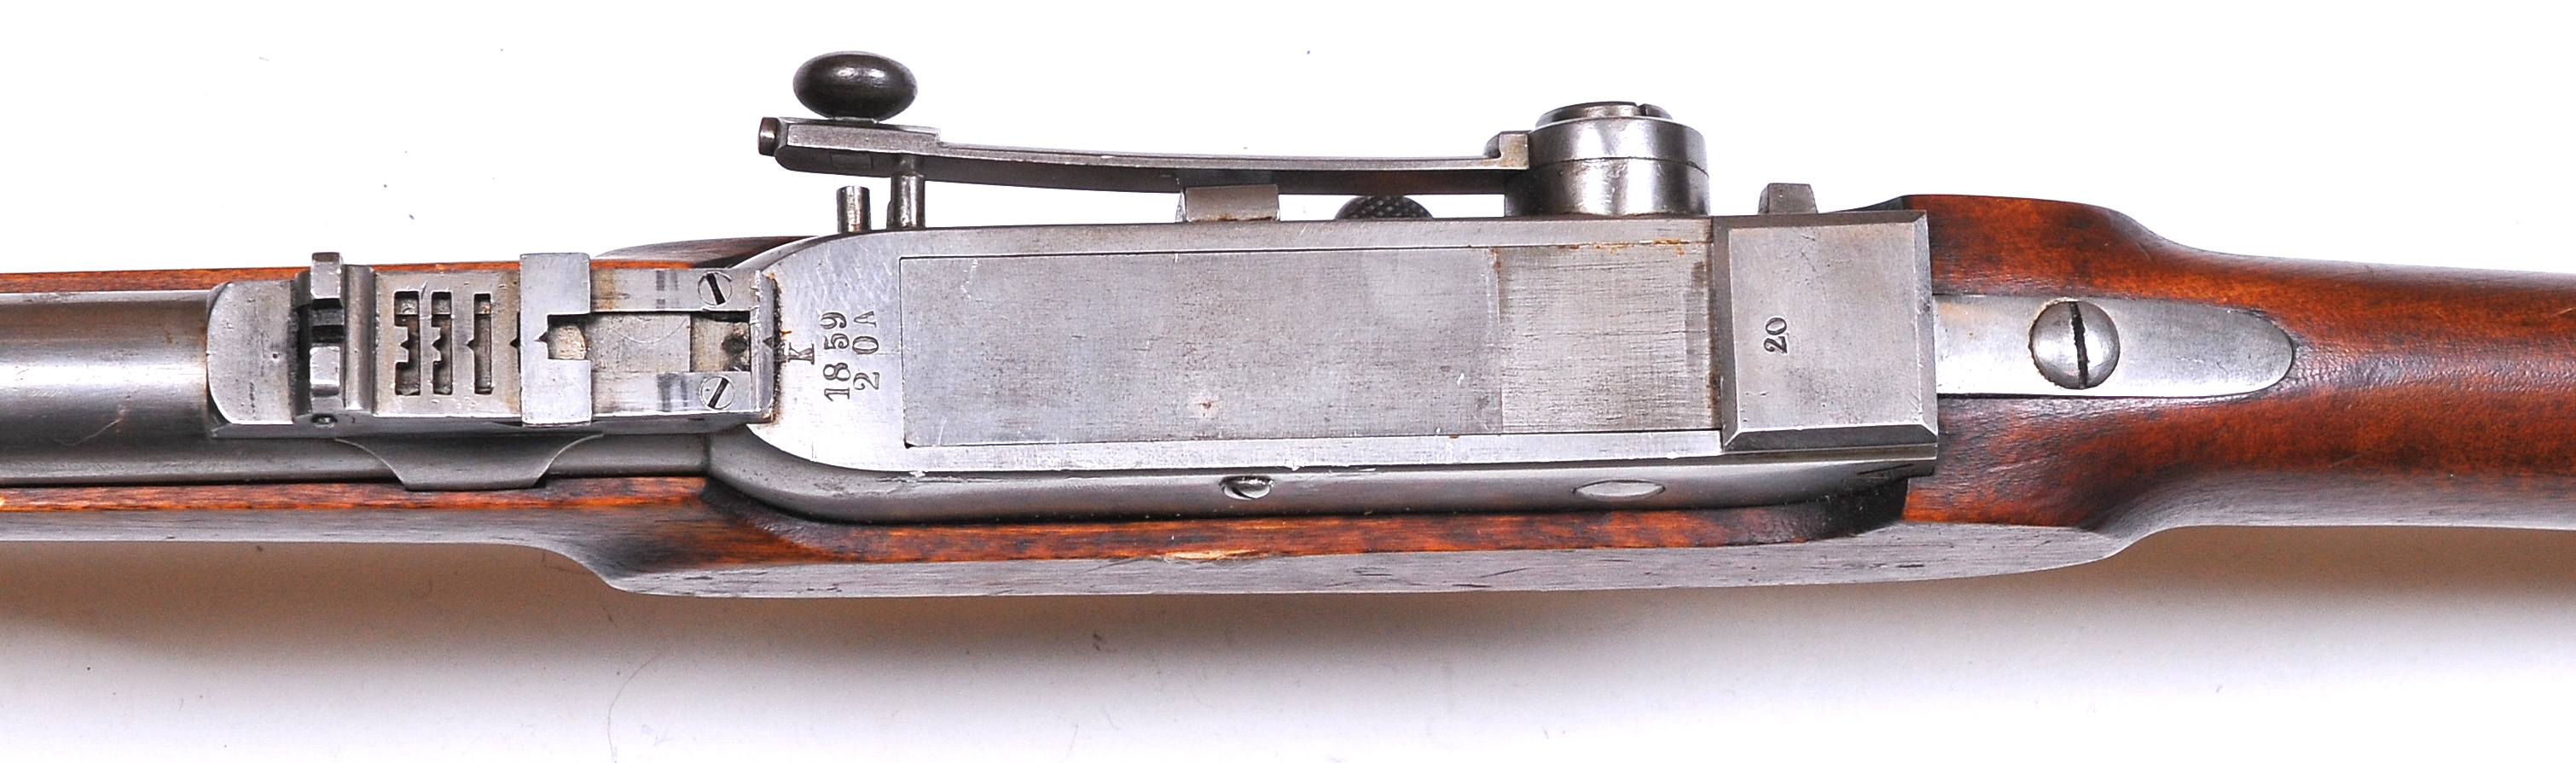 ./guns/rifle/bilder/Rifle-Kongsberg-Kammerlader-1859-2band-20A-4.jpg